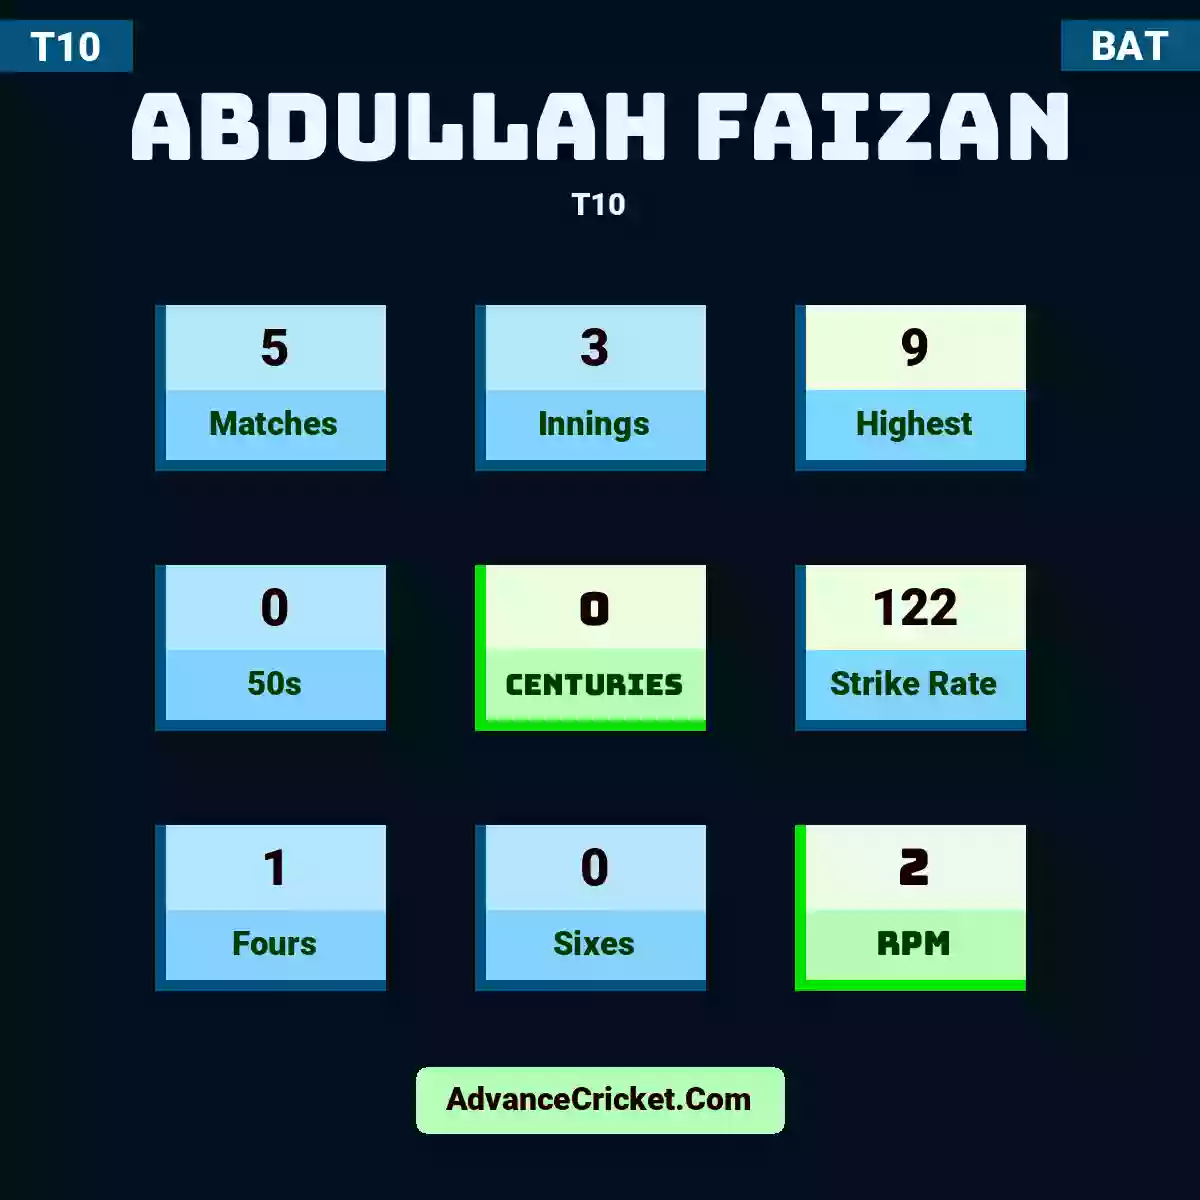 Abdullah Faizan T10 , Abdullah Faizan played 5 matches, scored 9 runs as highest, 0 half-centuries, and 0 centuries, with a strike rate of 122. A.Faizan hit 1 fours and 0 sixes, with an RPM of 2.